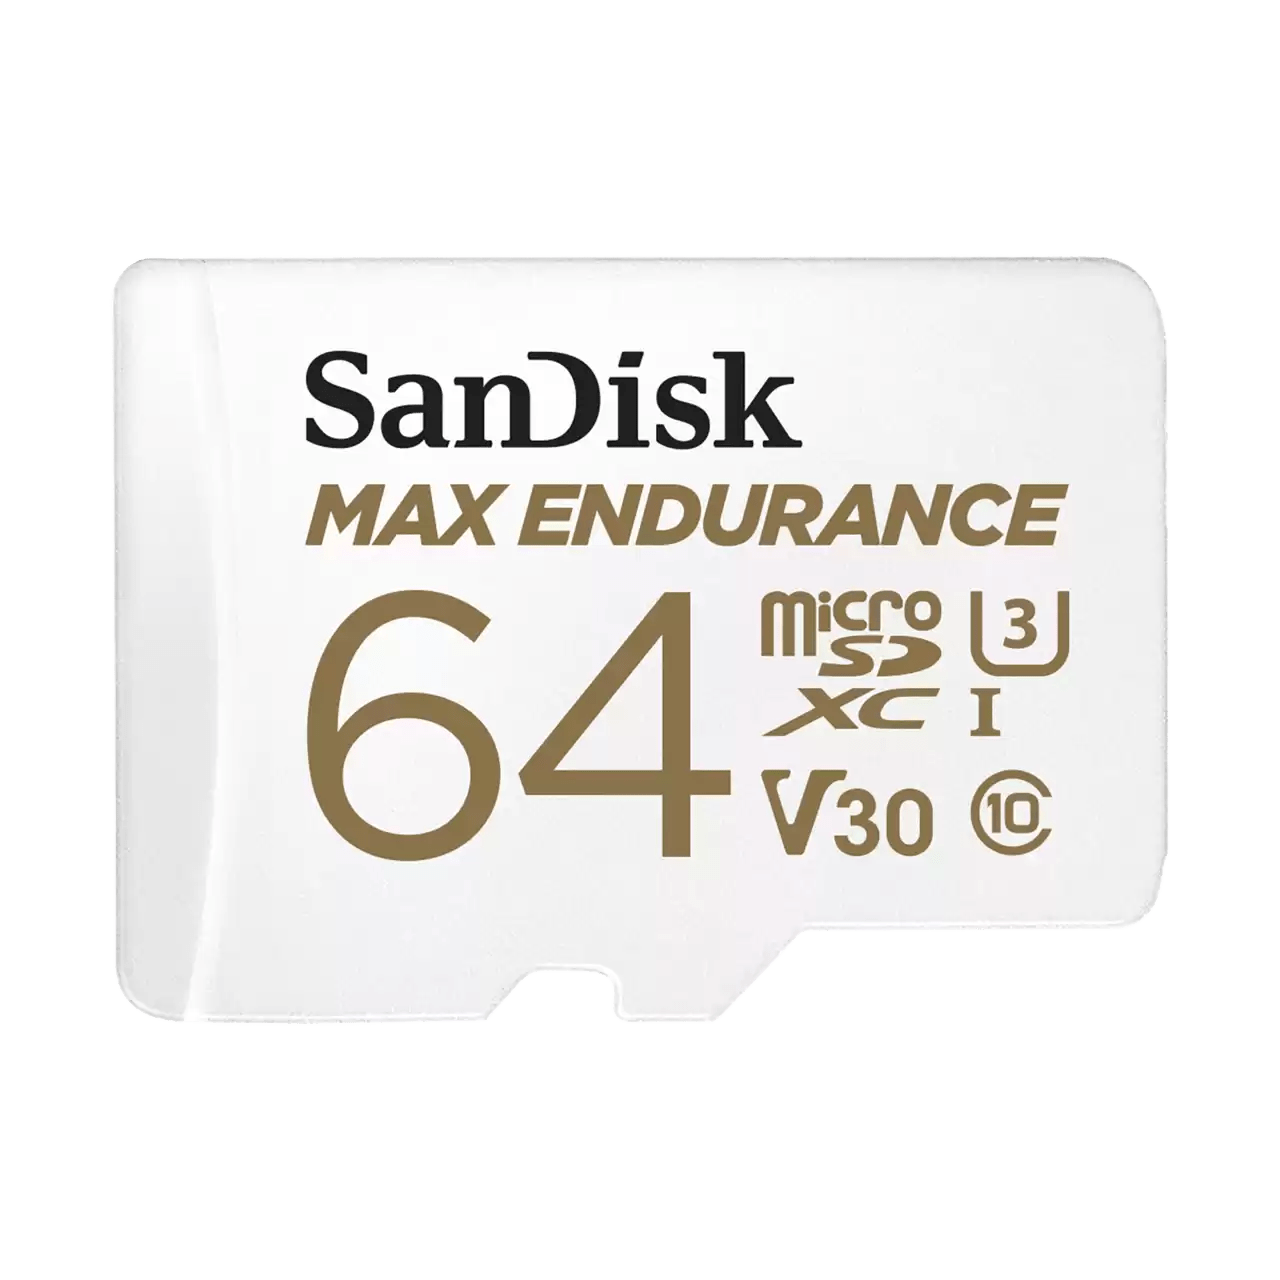 SanDisk Max Endurance 64GB V30 U3 C10 UHS - I microSDXC 記憶卡 (SDSQQVR - 064G - GN6IA) - Fever Electrics 電器熱網購平台